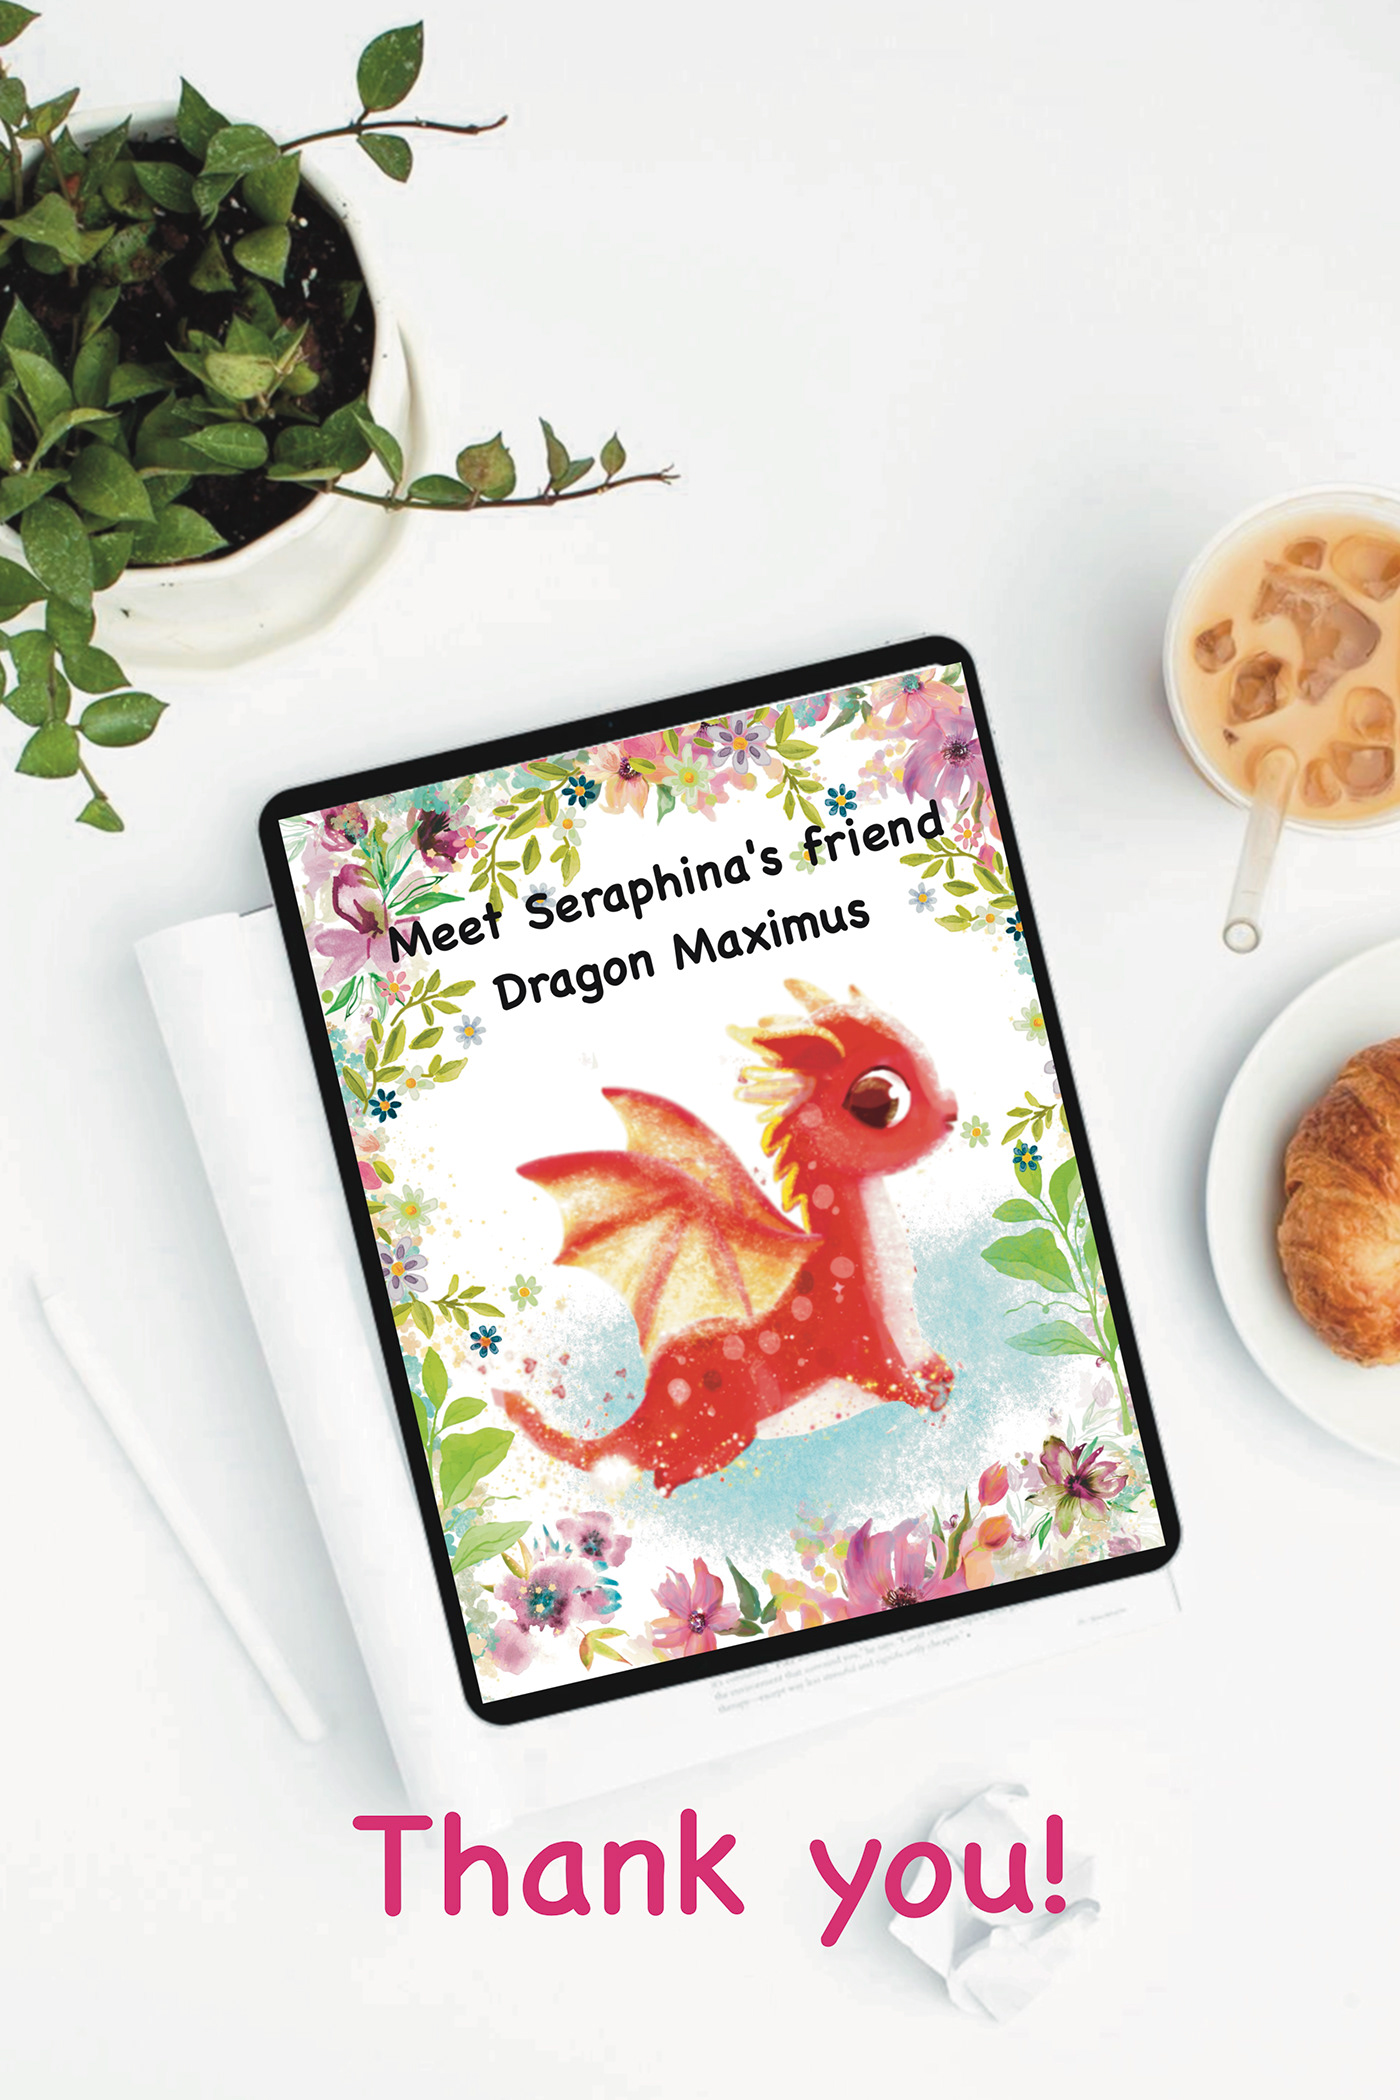 children books illustrations Digital Art  Illustrator digital artist Children Story Books whimsical illstrations